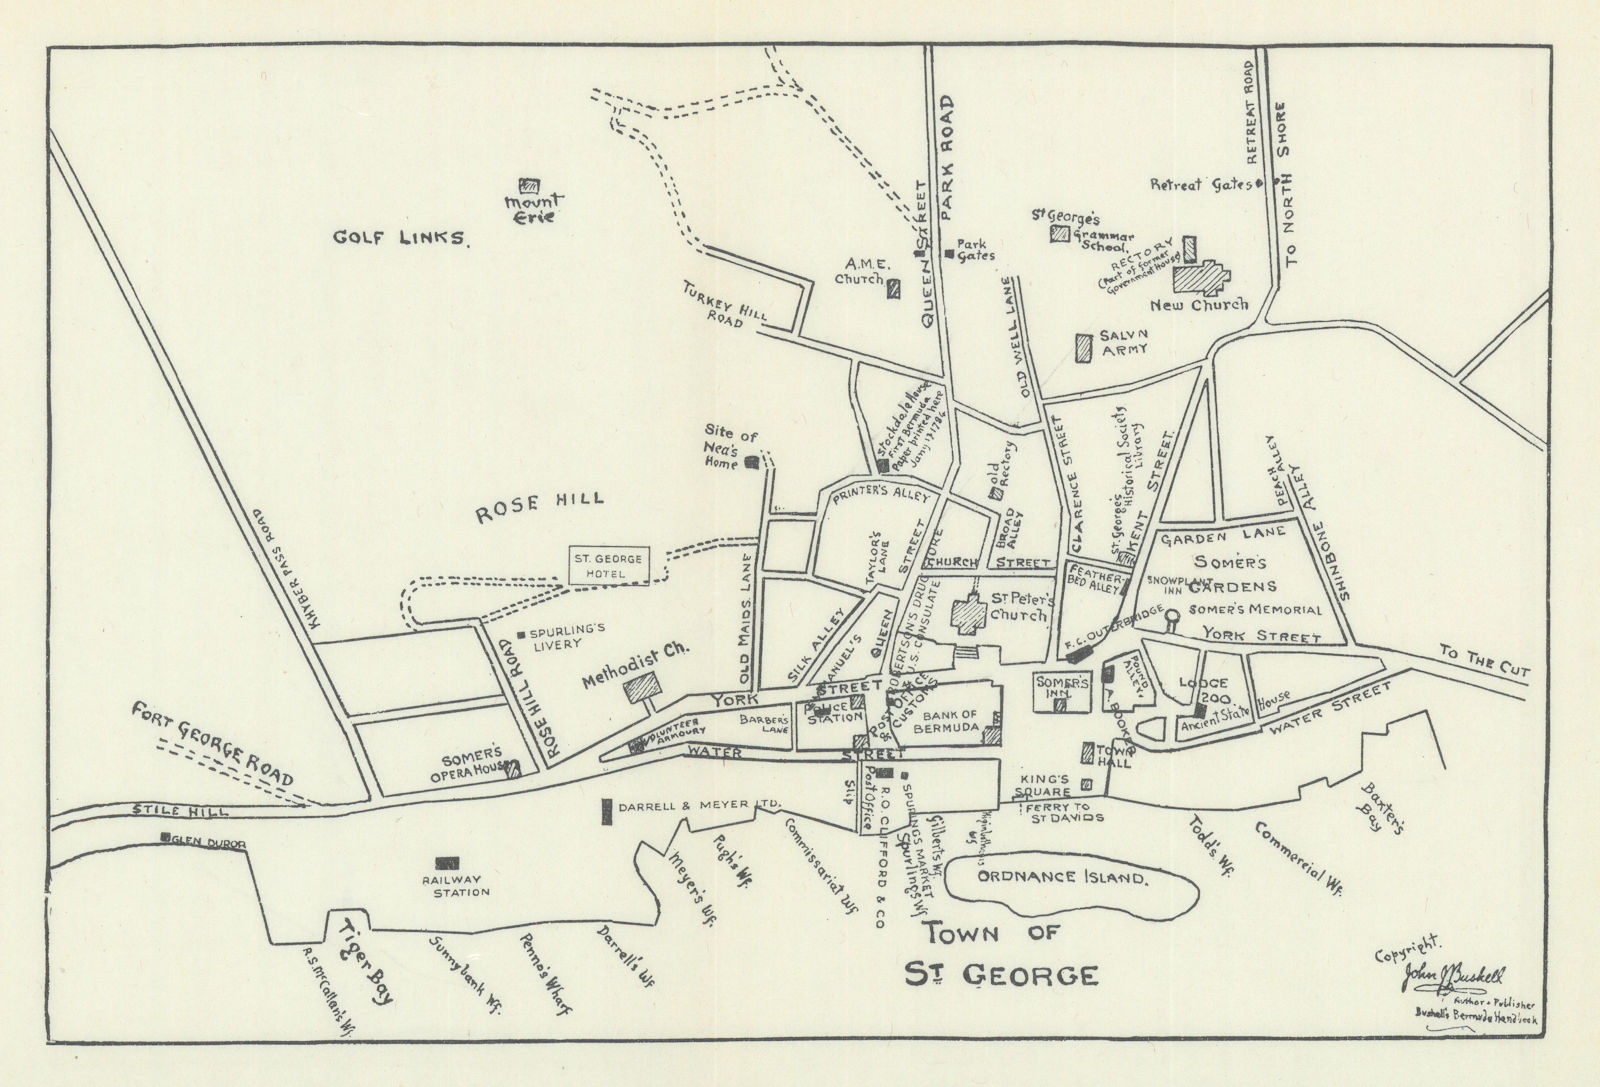 Associate Product St. George, Bermuda town / city plan by John Bushell 1938 old vintage map